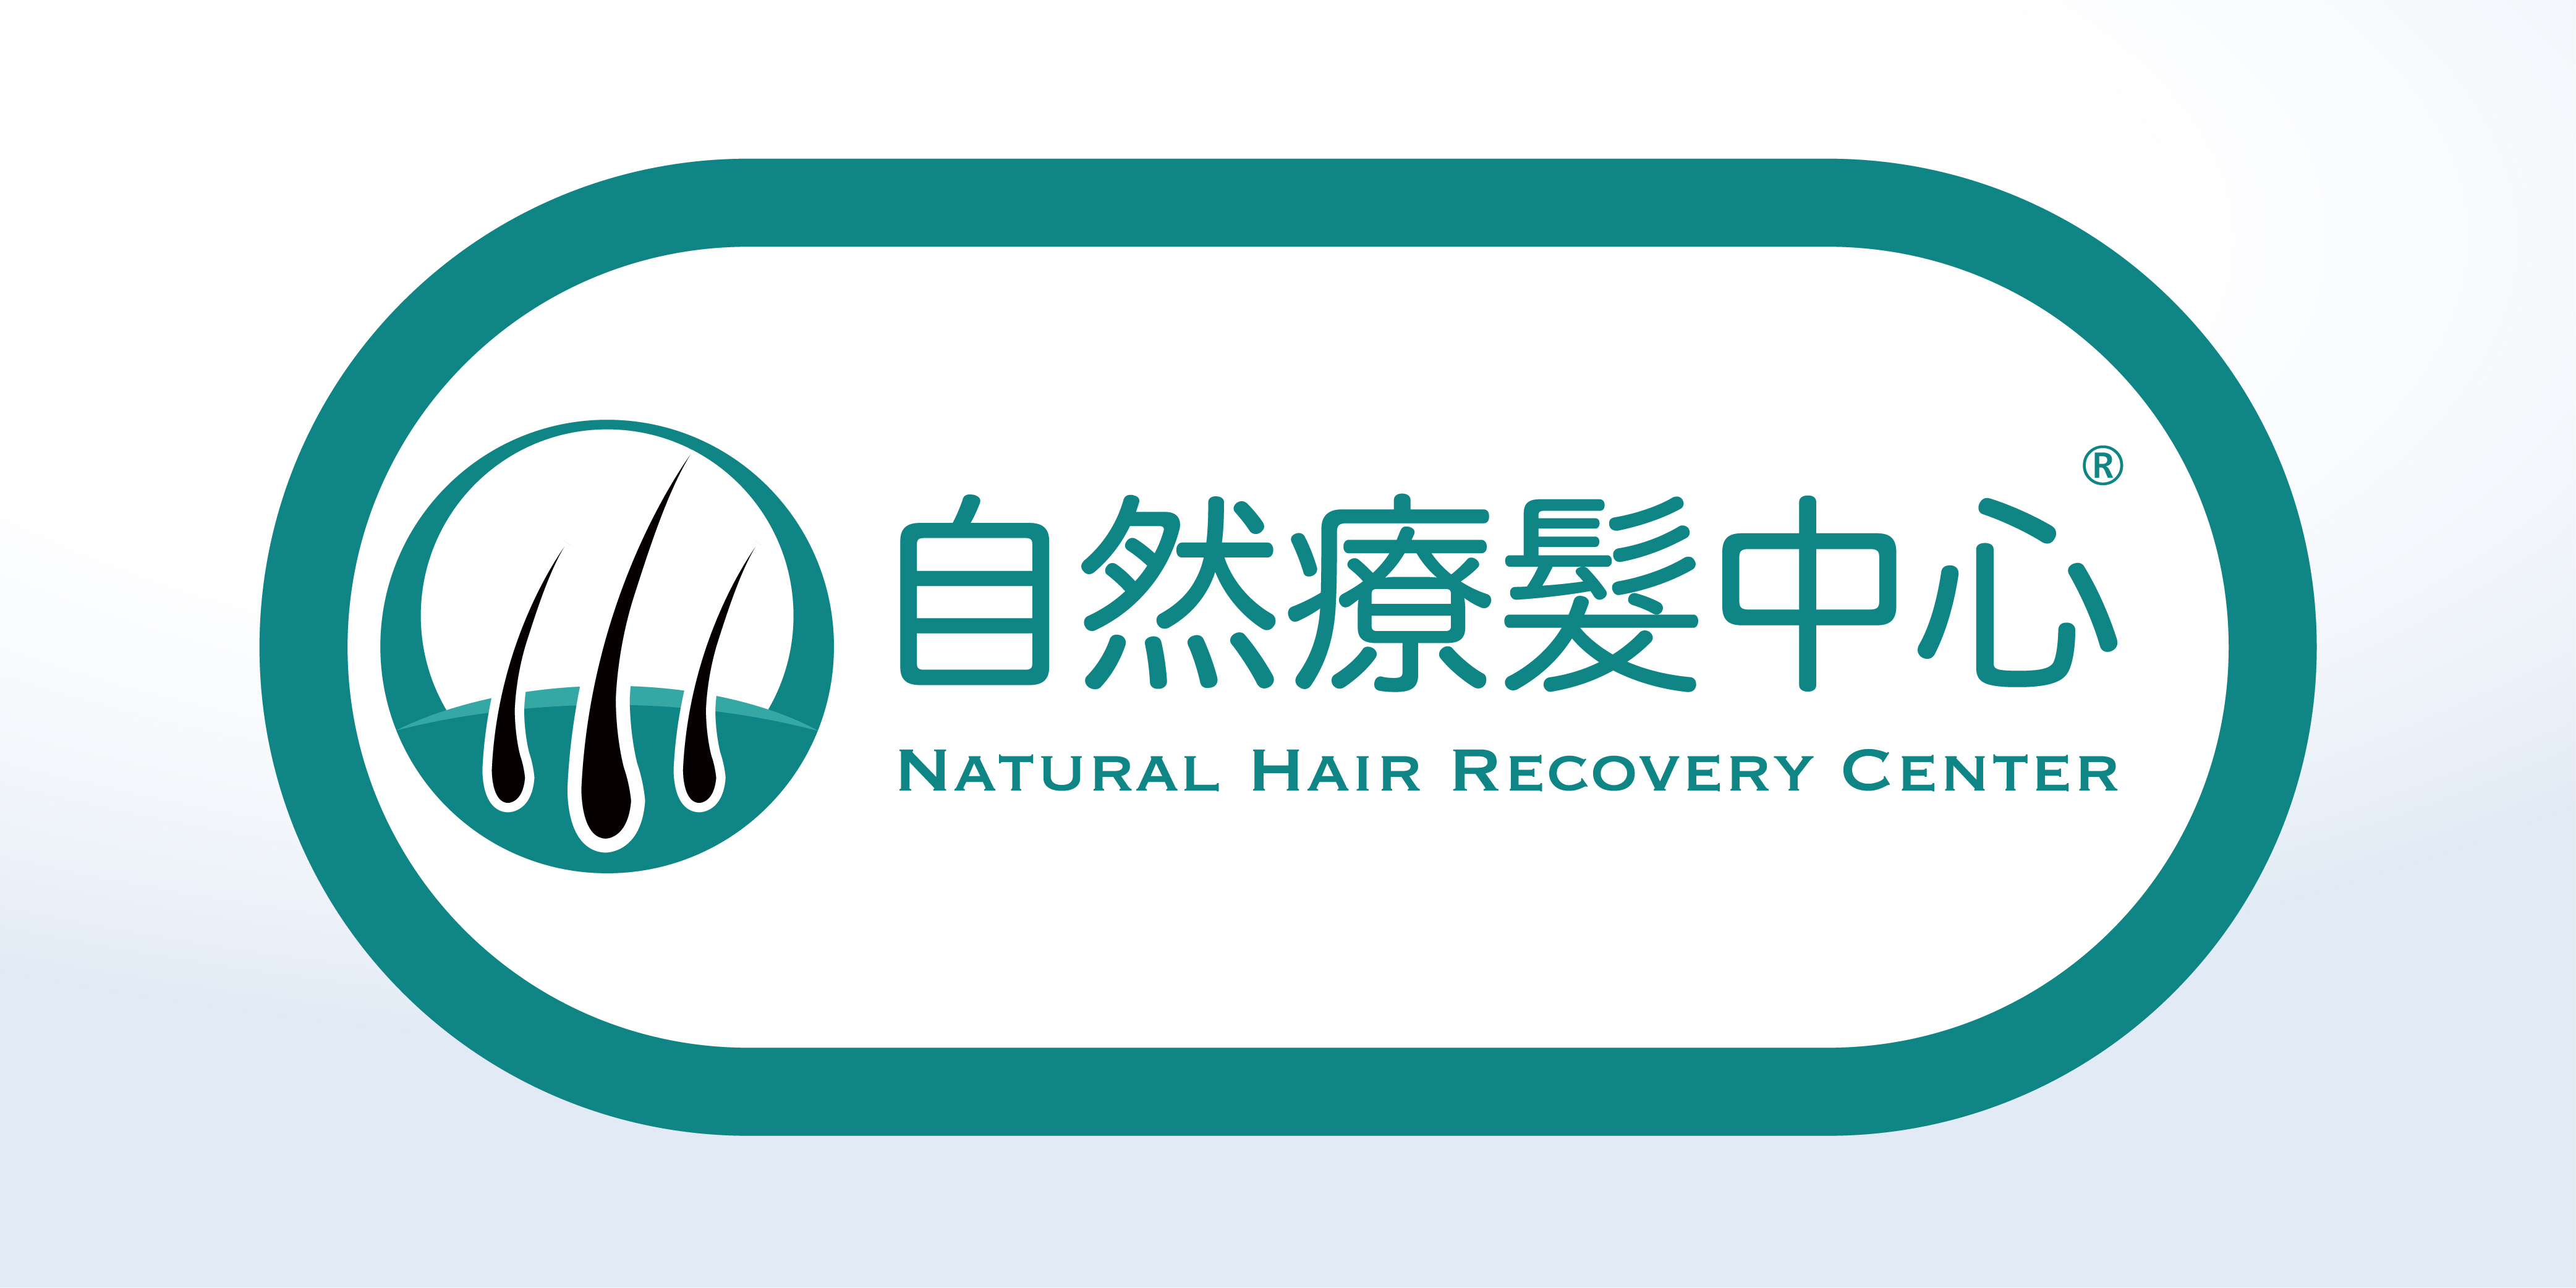 染发: 自然療髮中心 Natural Hair Recovery Center ®